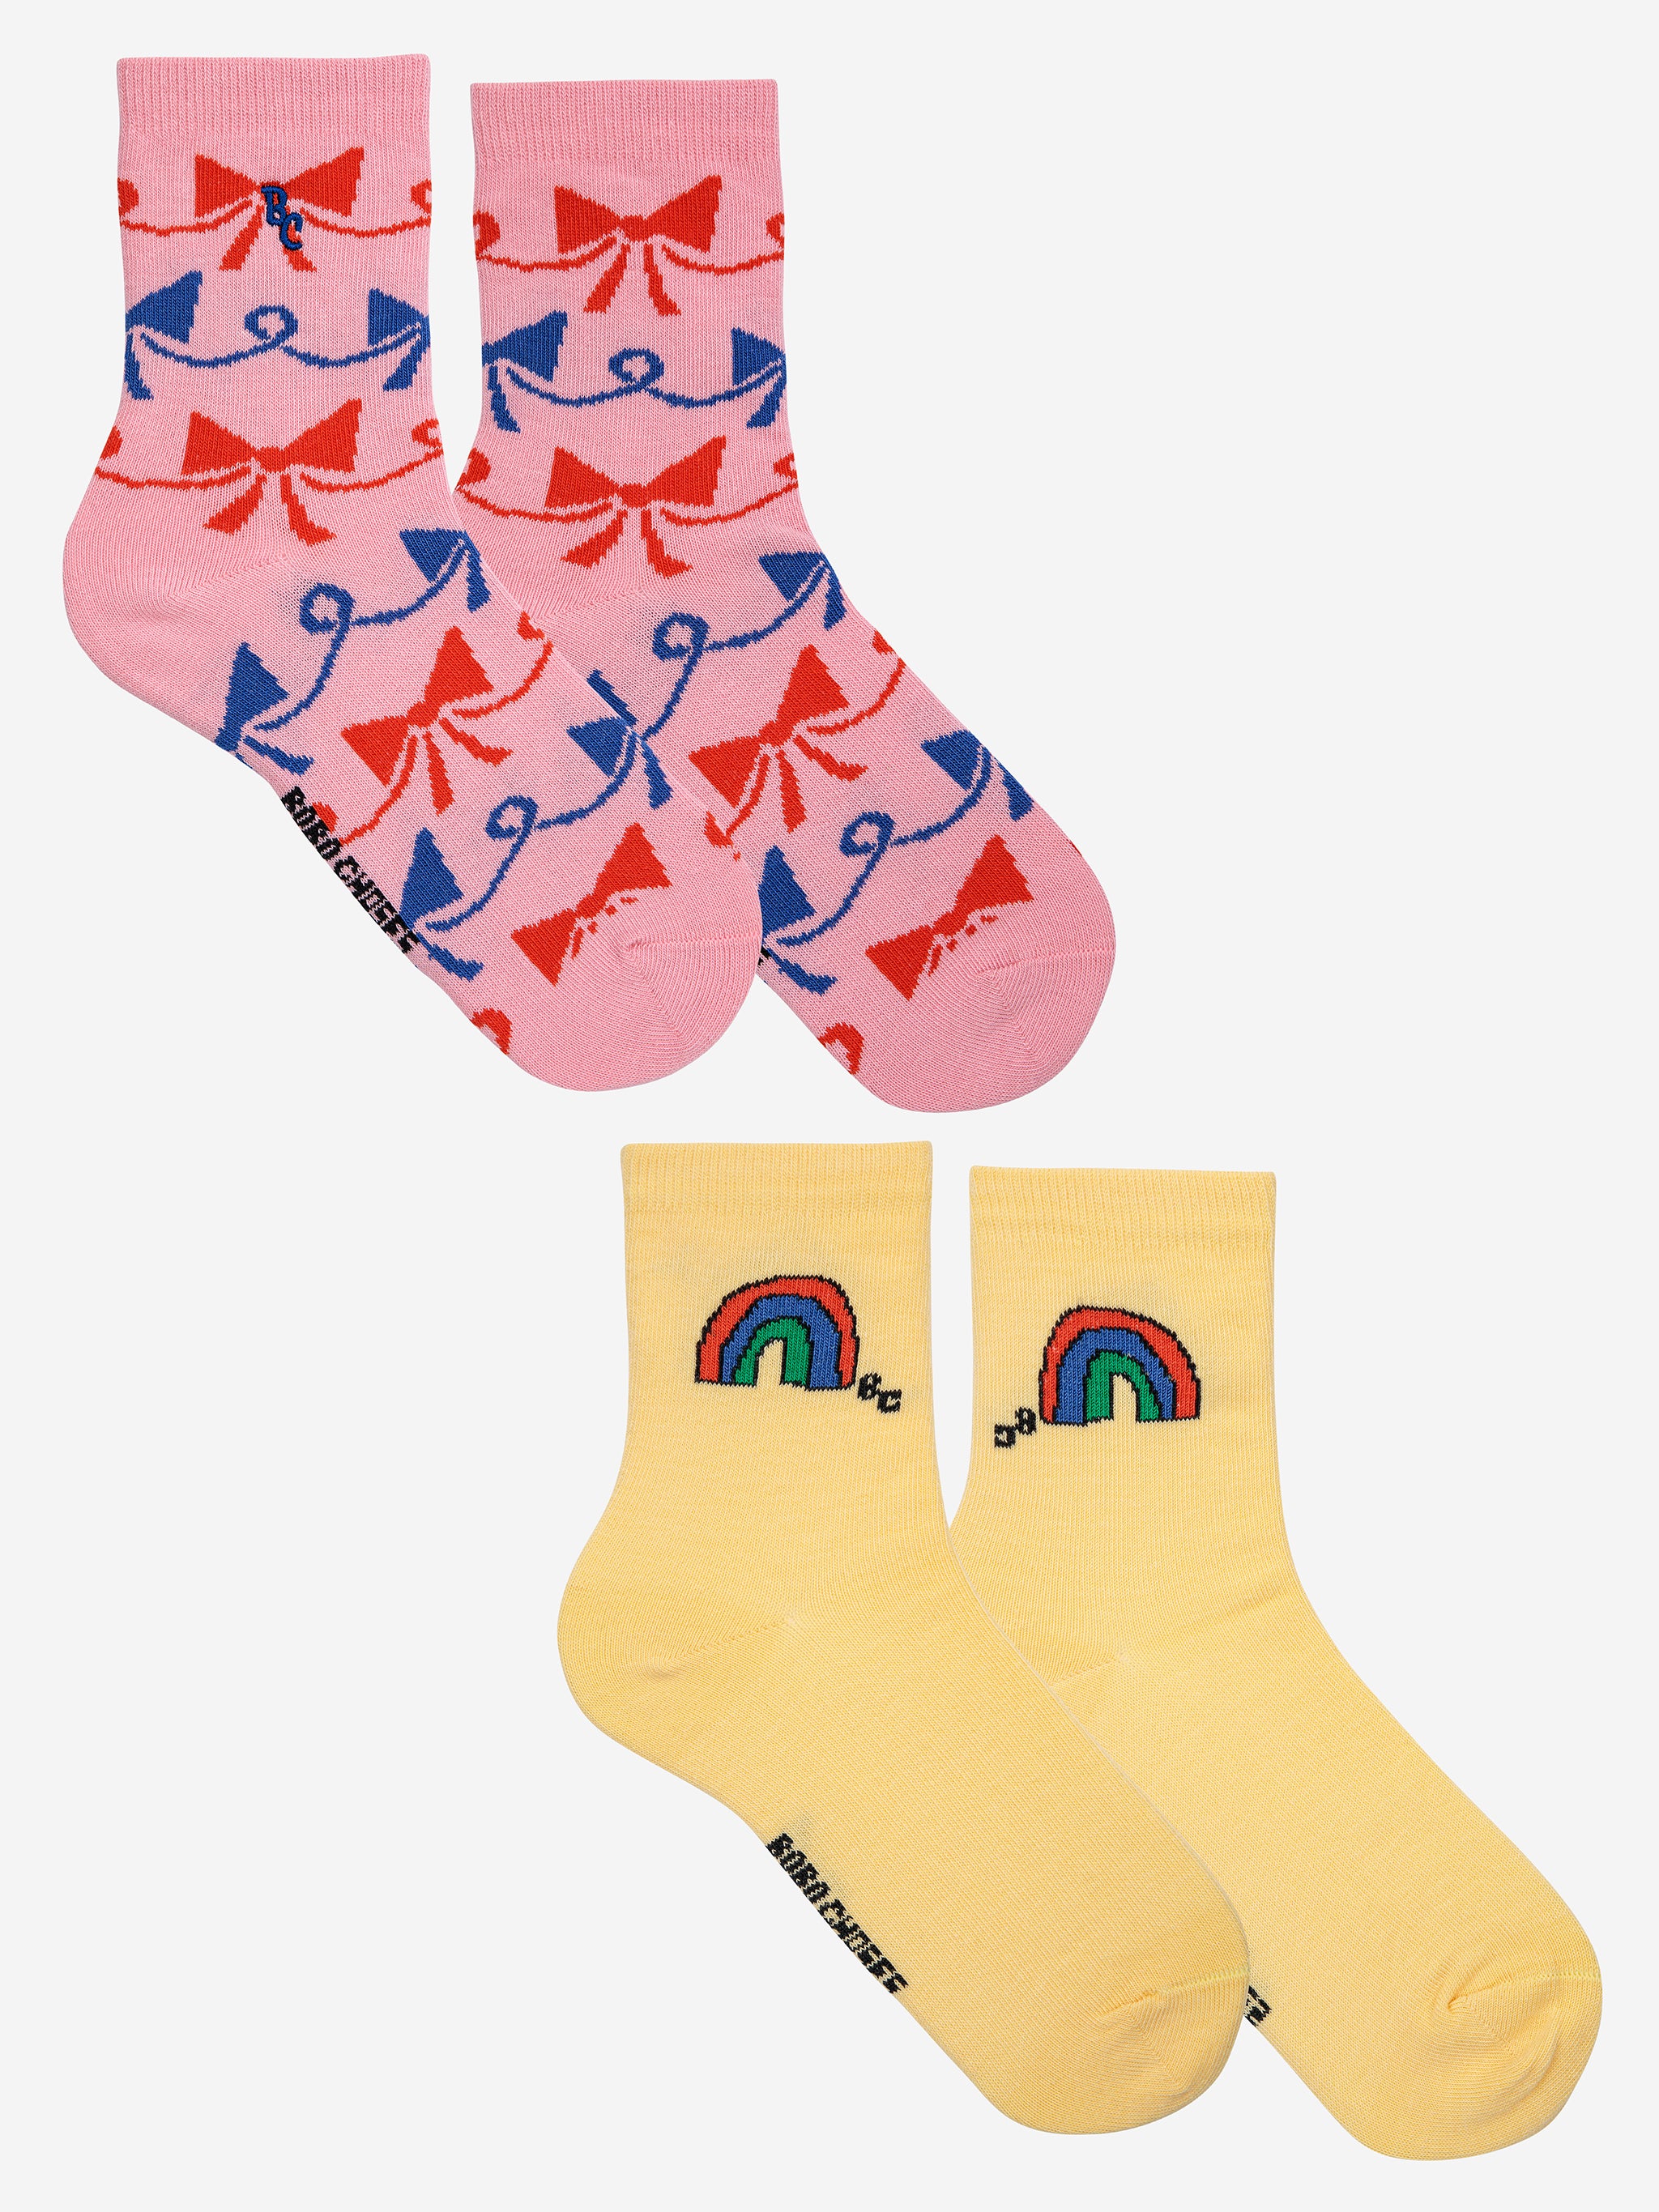 Regenbogen & Ribbon Bow All Over Kurze Socken Pack x 2